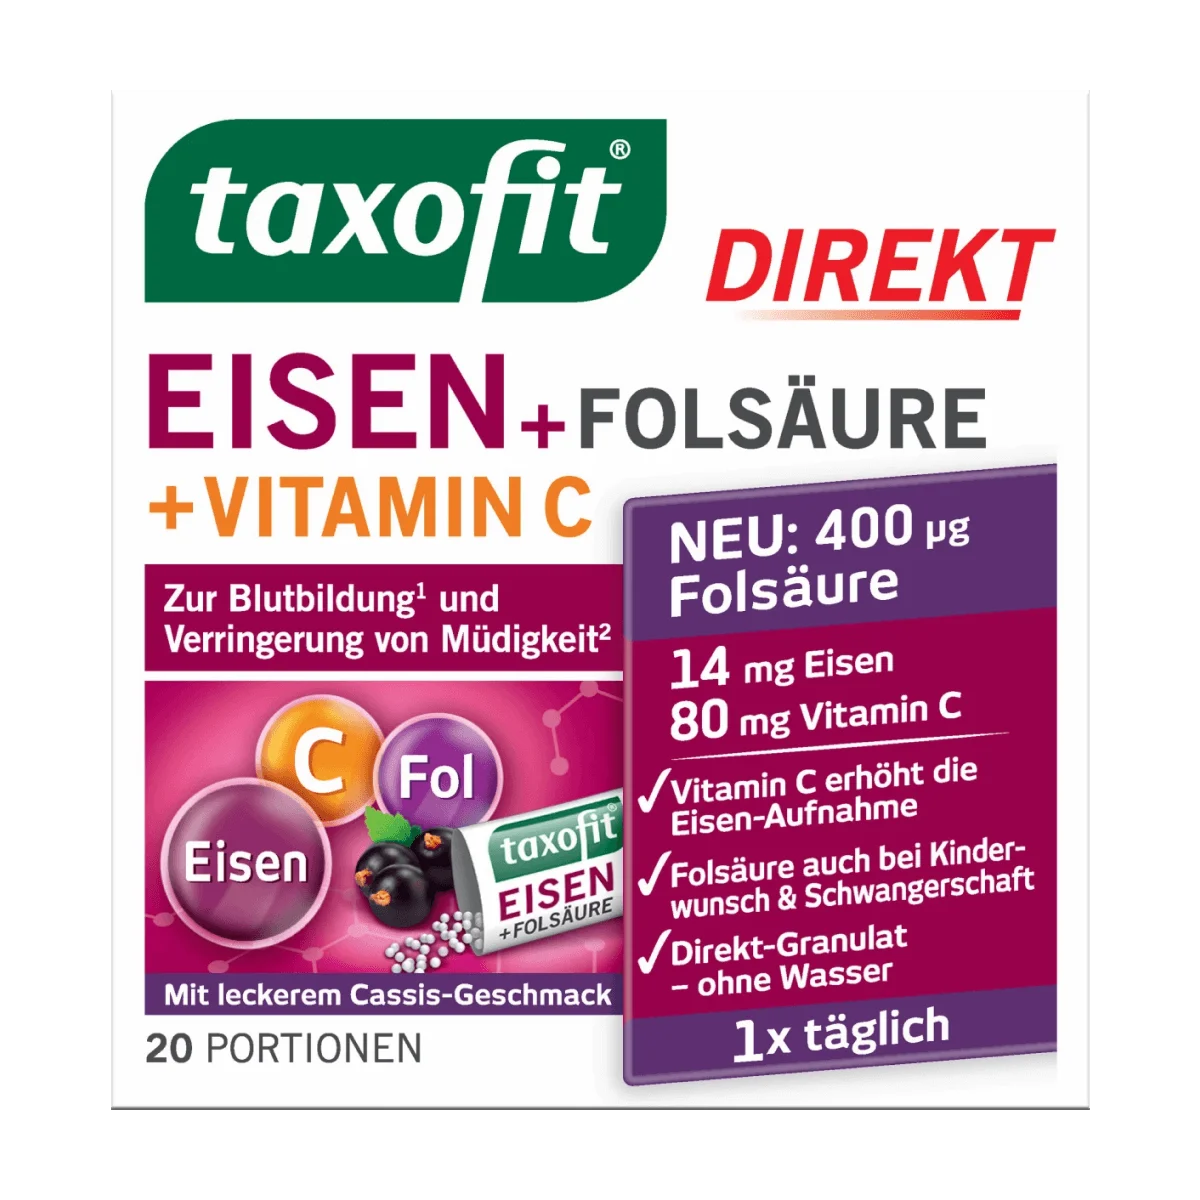 taxofit Eisen + Folsäure + Vitamin C direkt Granulat (20 Stück), 22 g